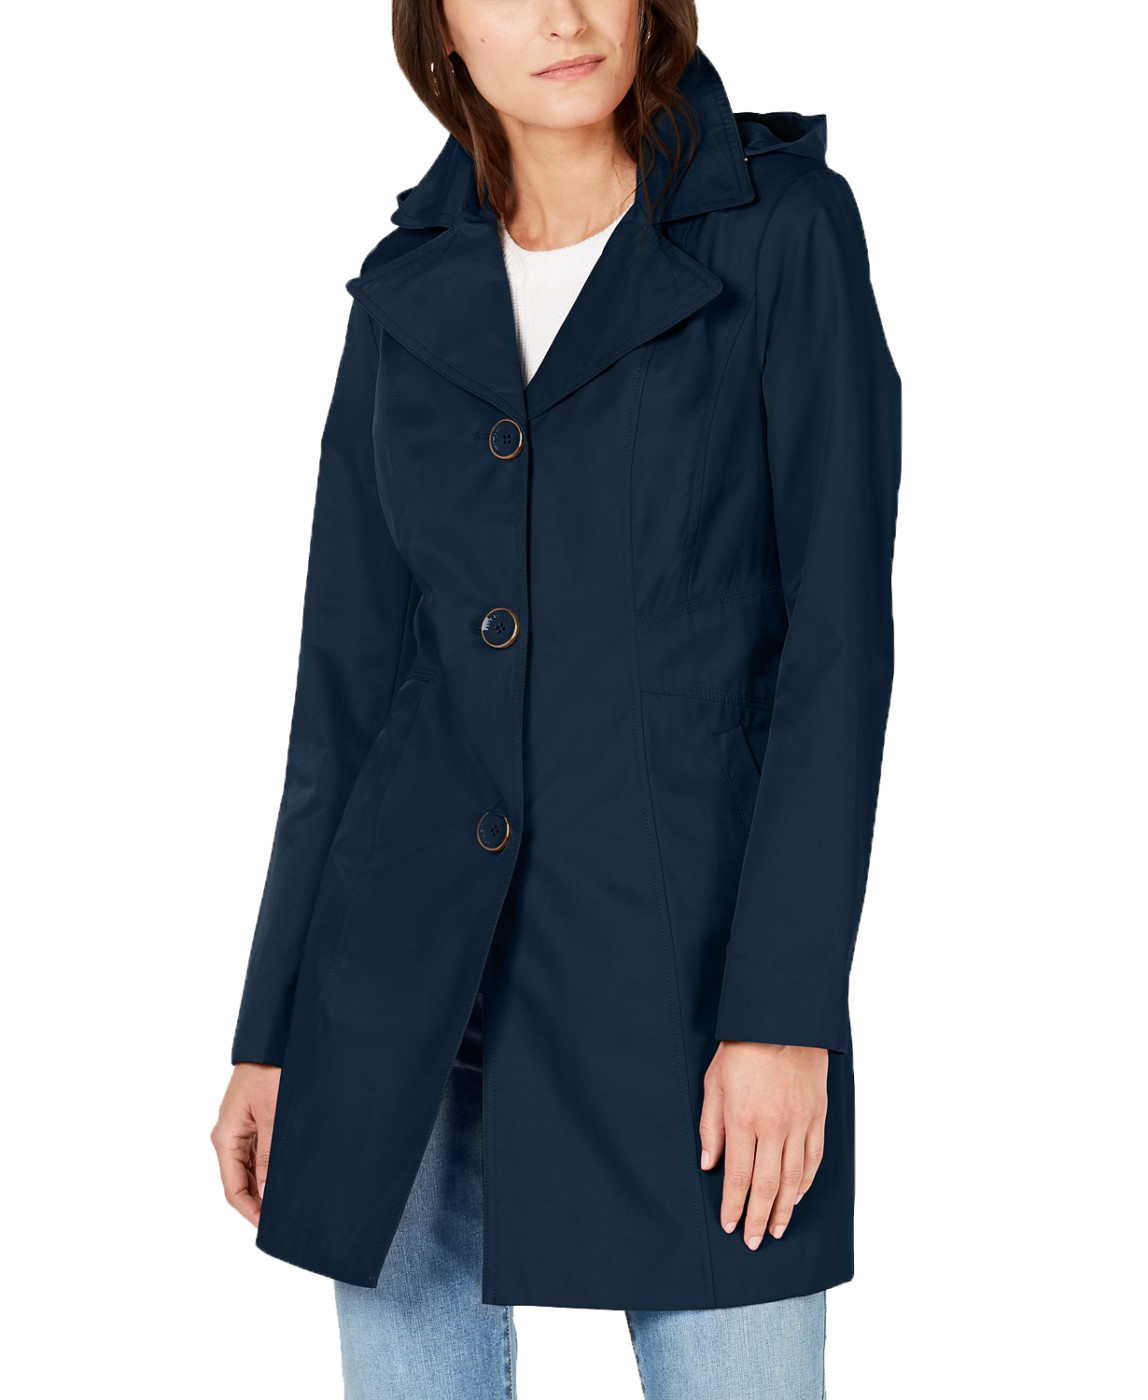 woocommerce-673321-2209615.cloudwaysapps.com-anne-klein-womens-water-resistant-hooded-raincoat